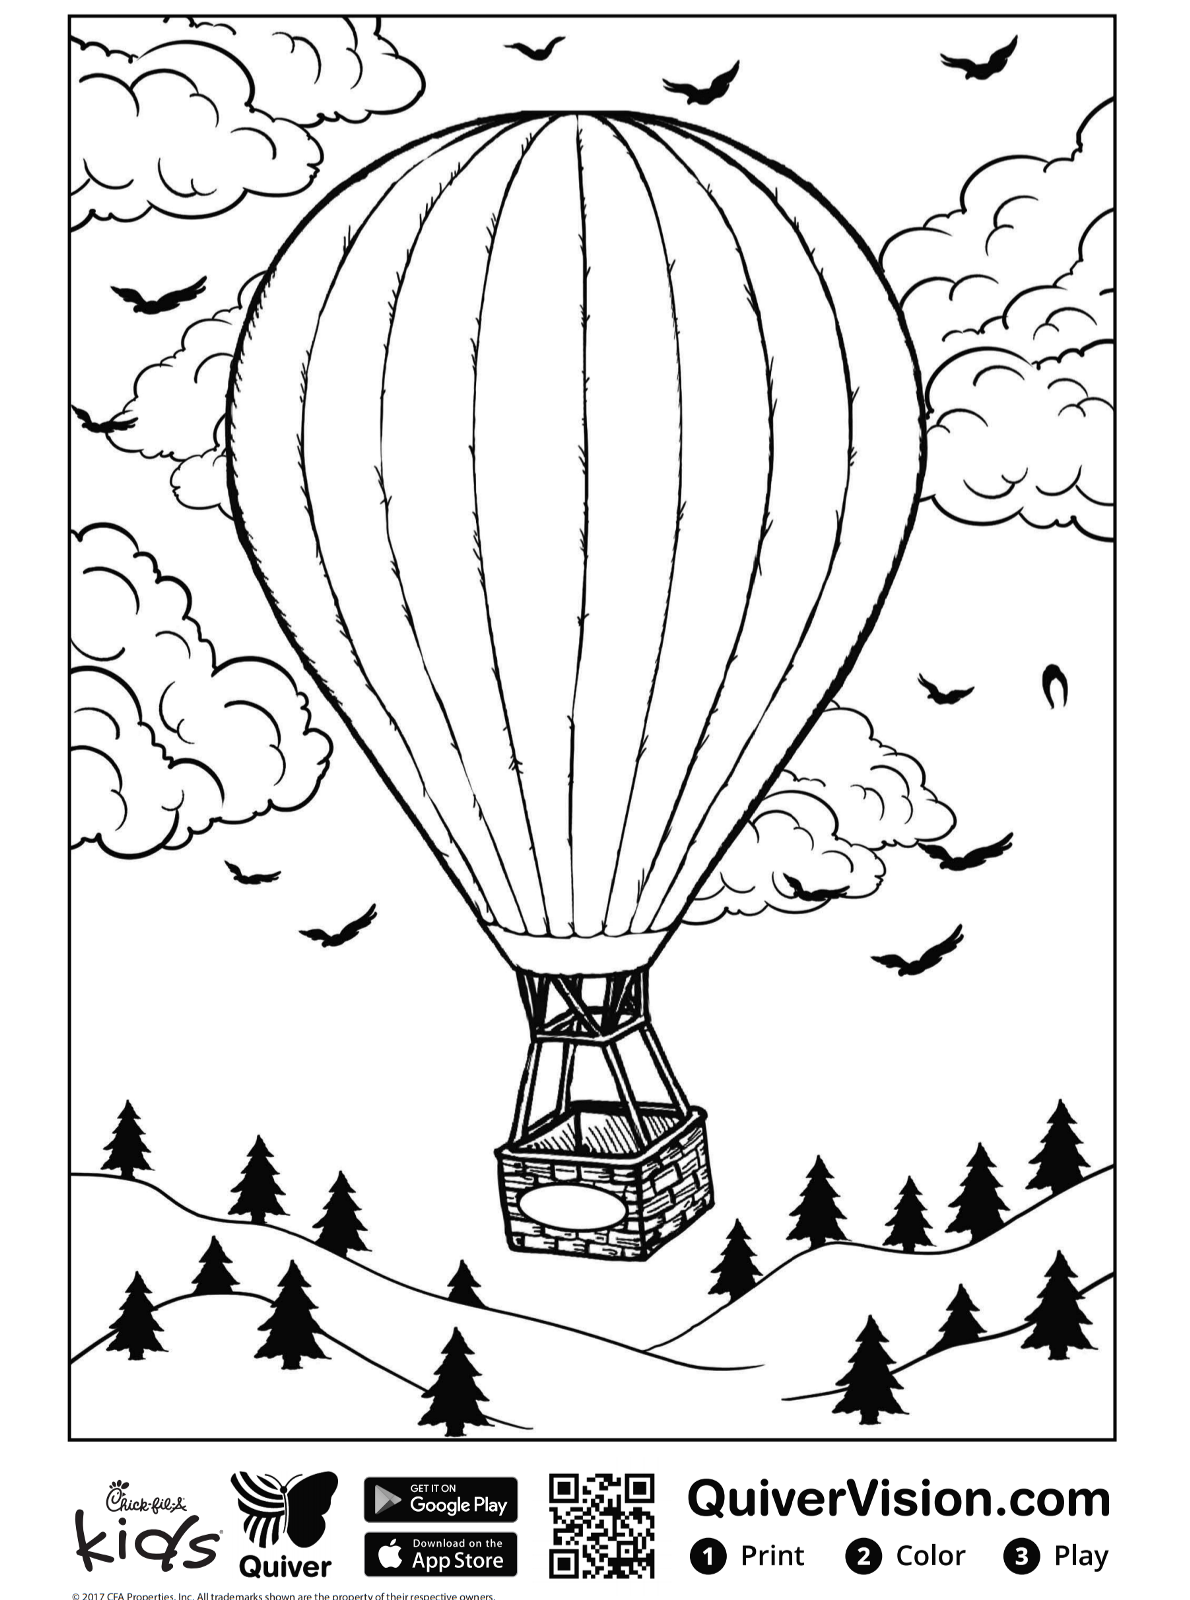 Kids-n-fun.com | Coloring page Quiver Hot air balloon